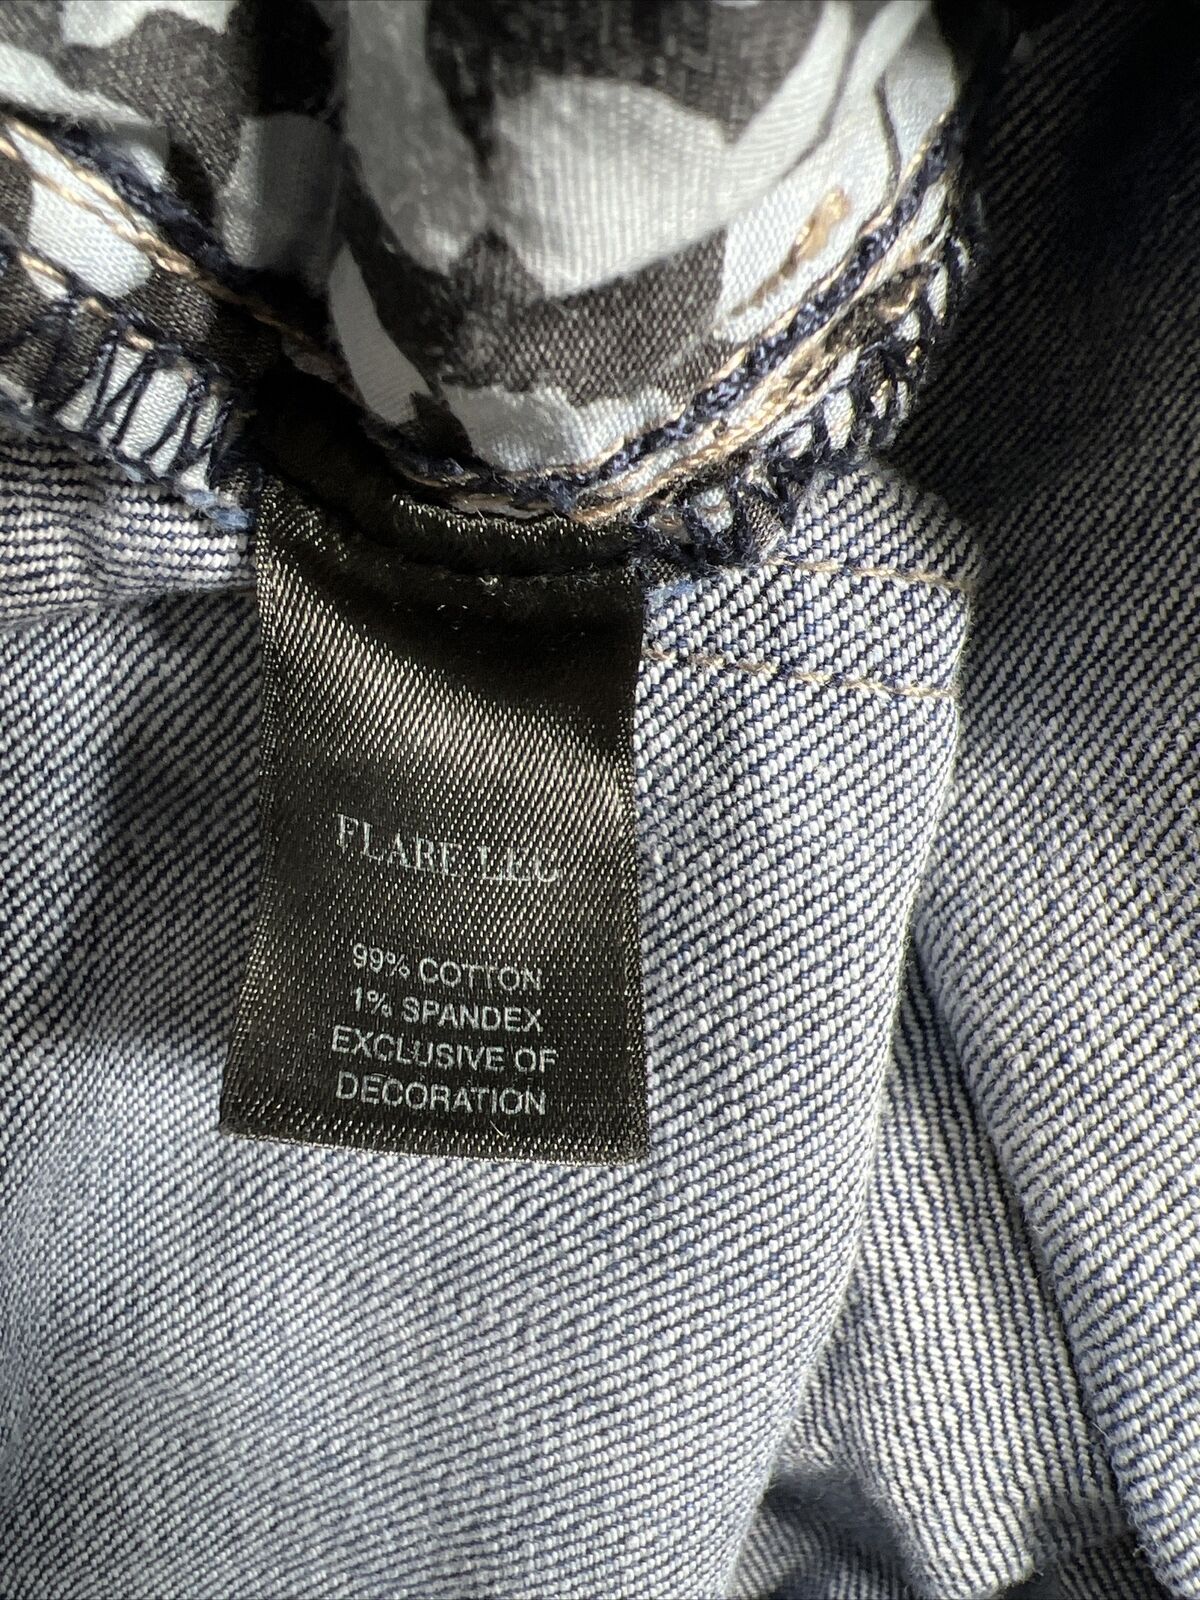 White House Black Market Women's Medium Wash Flare Jeans - 4R